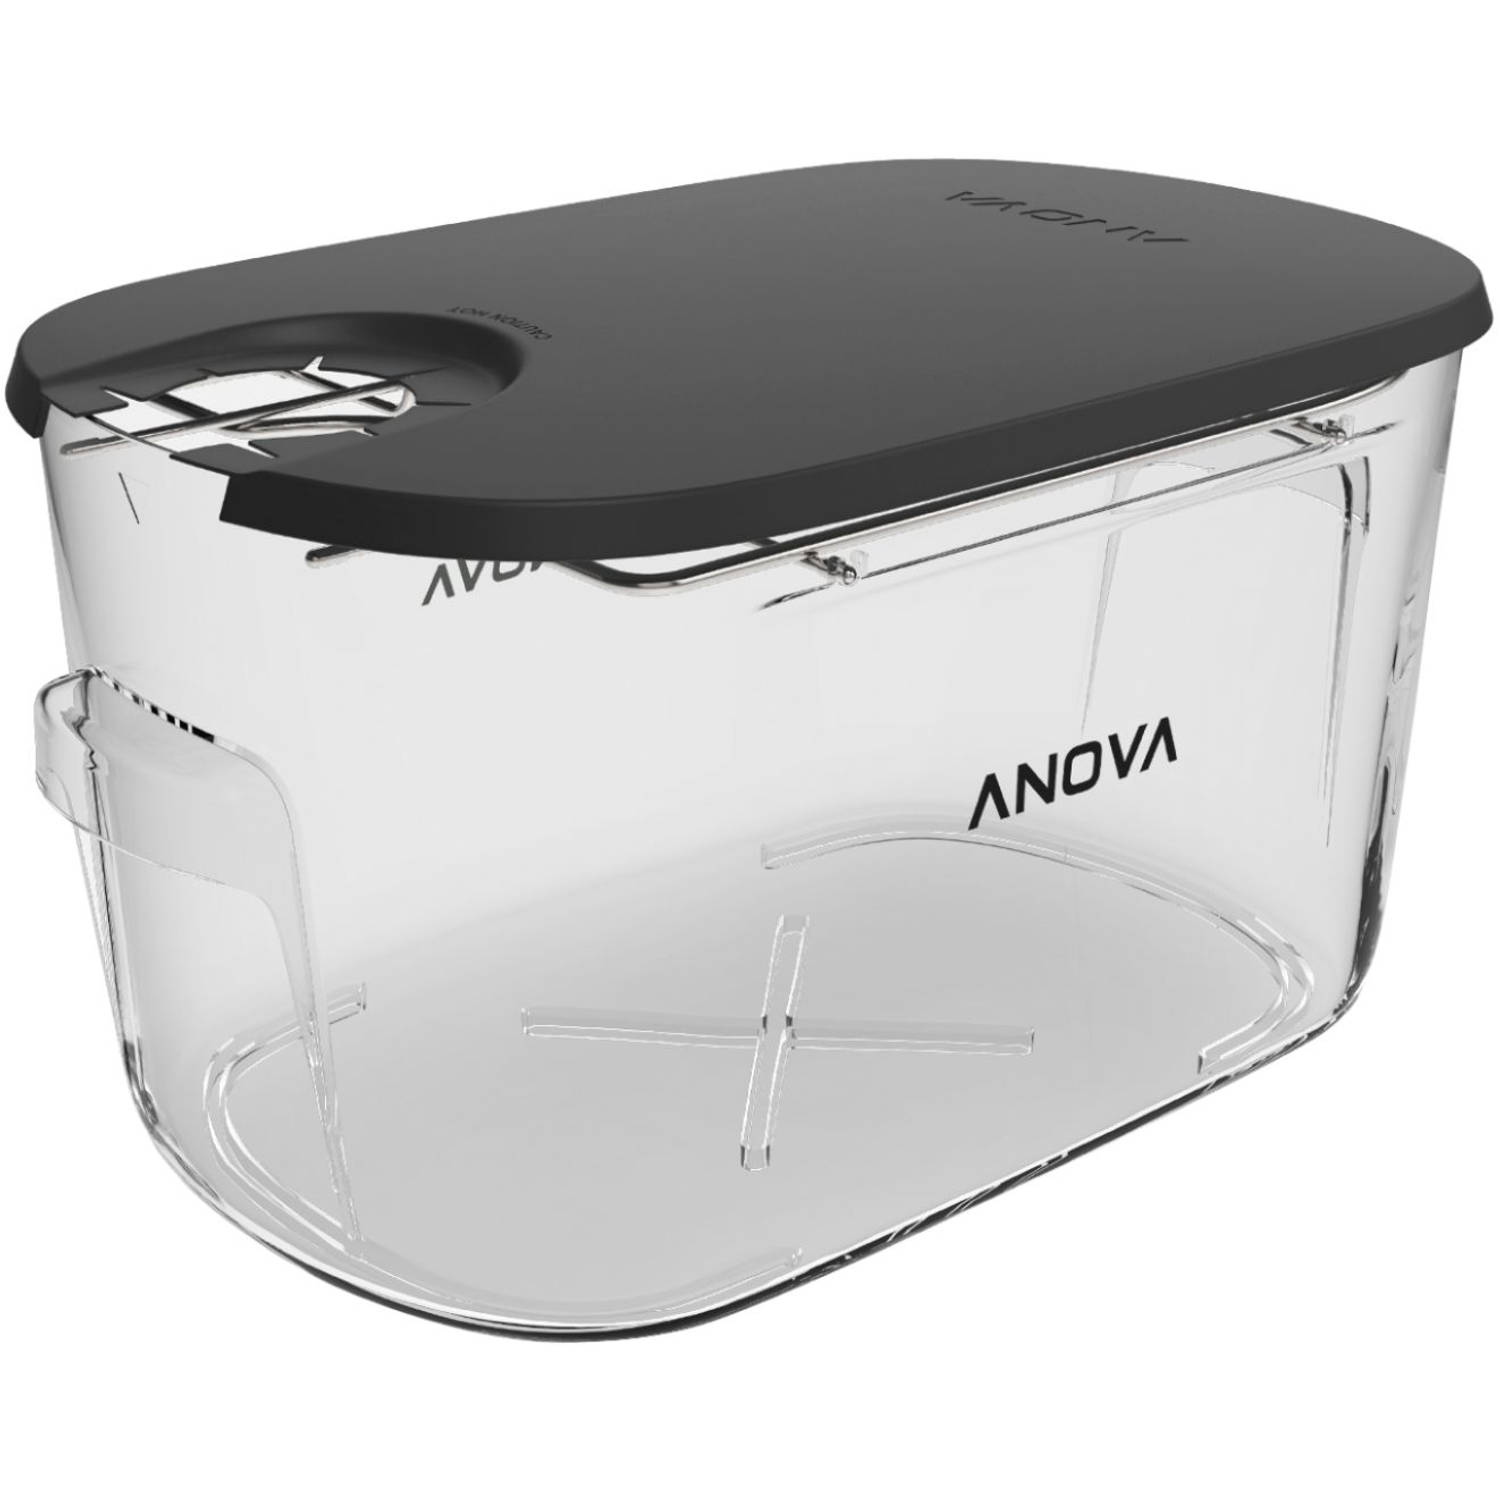 Anova Precision Cooker Container (12 liter)